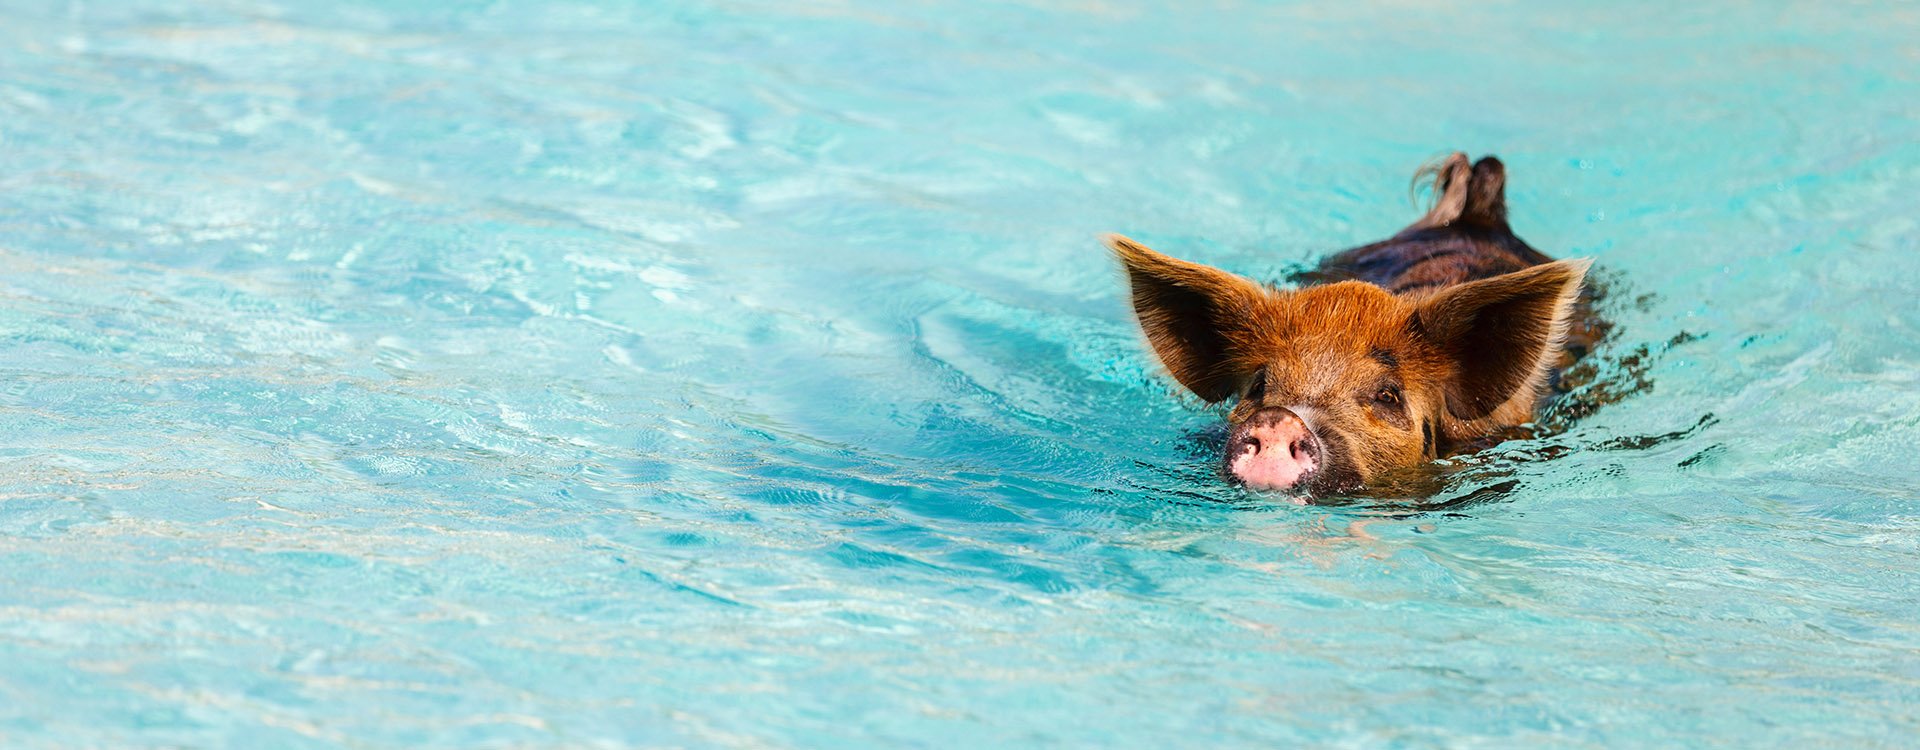 Pig swimming in a water near island of Exuma Bahamas